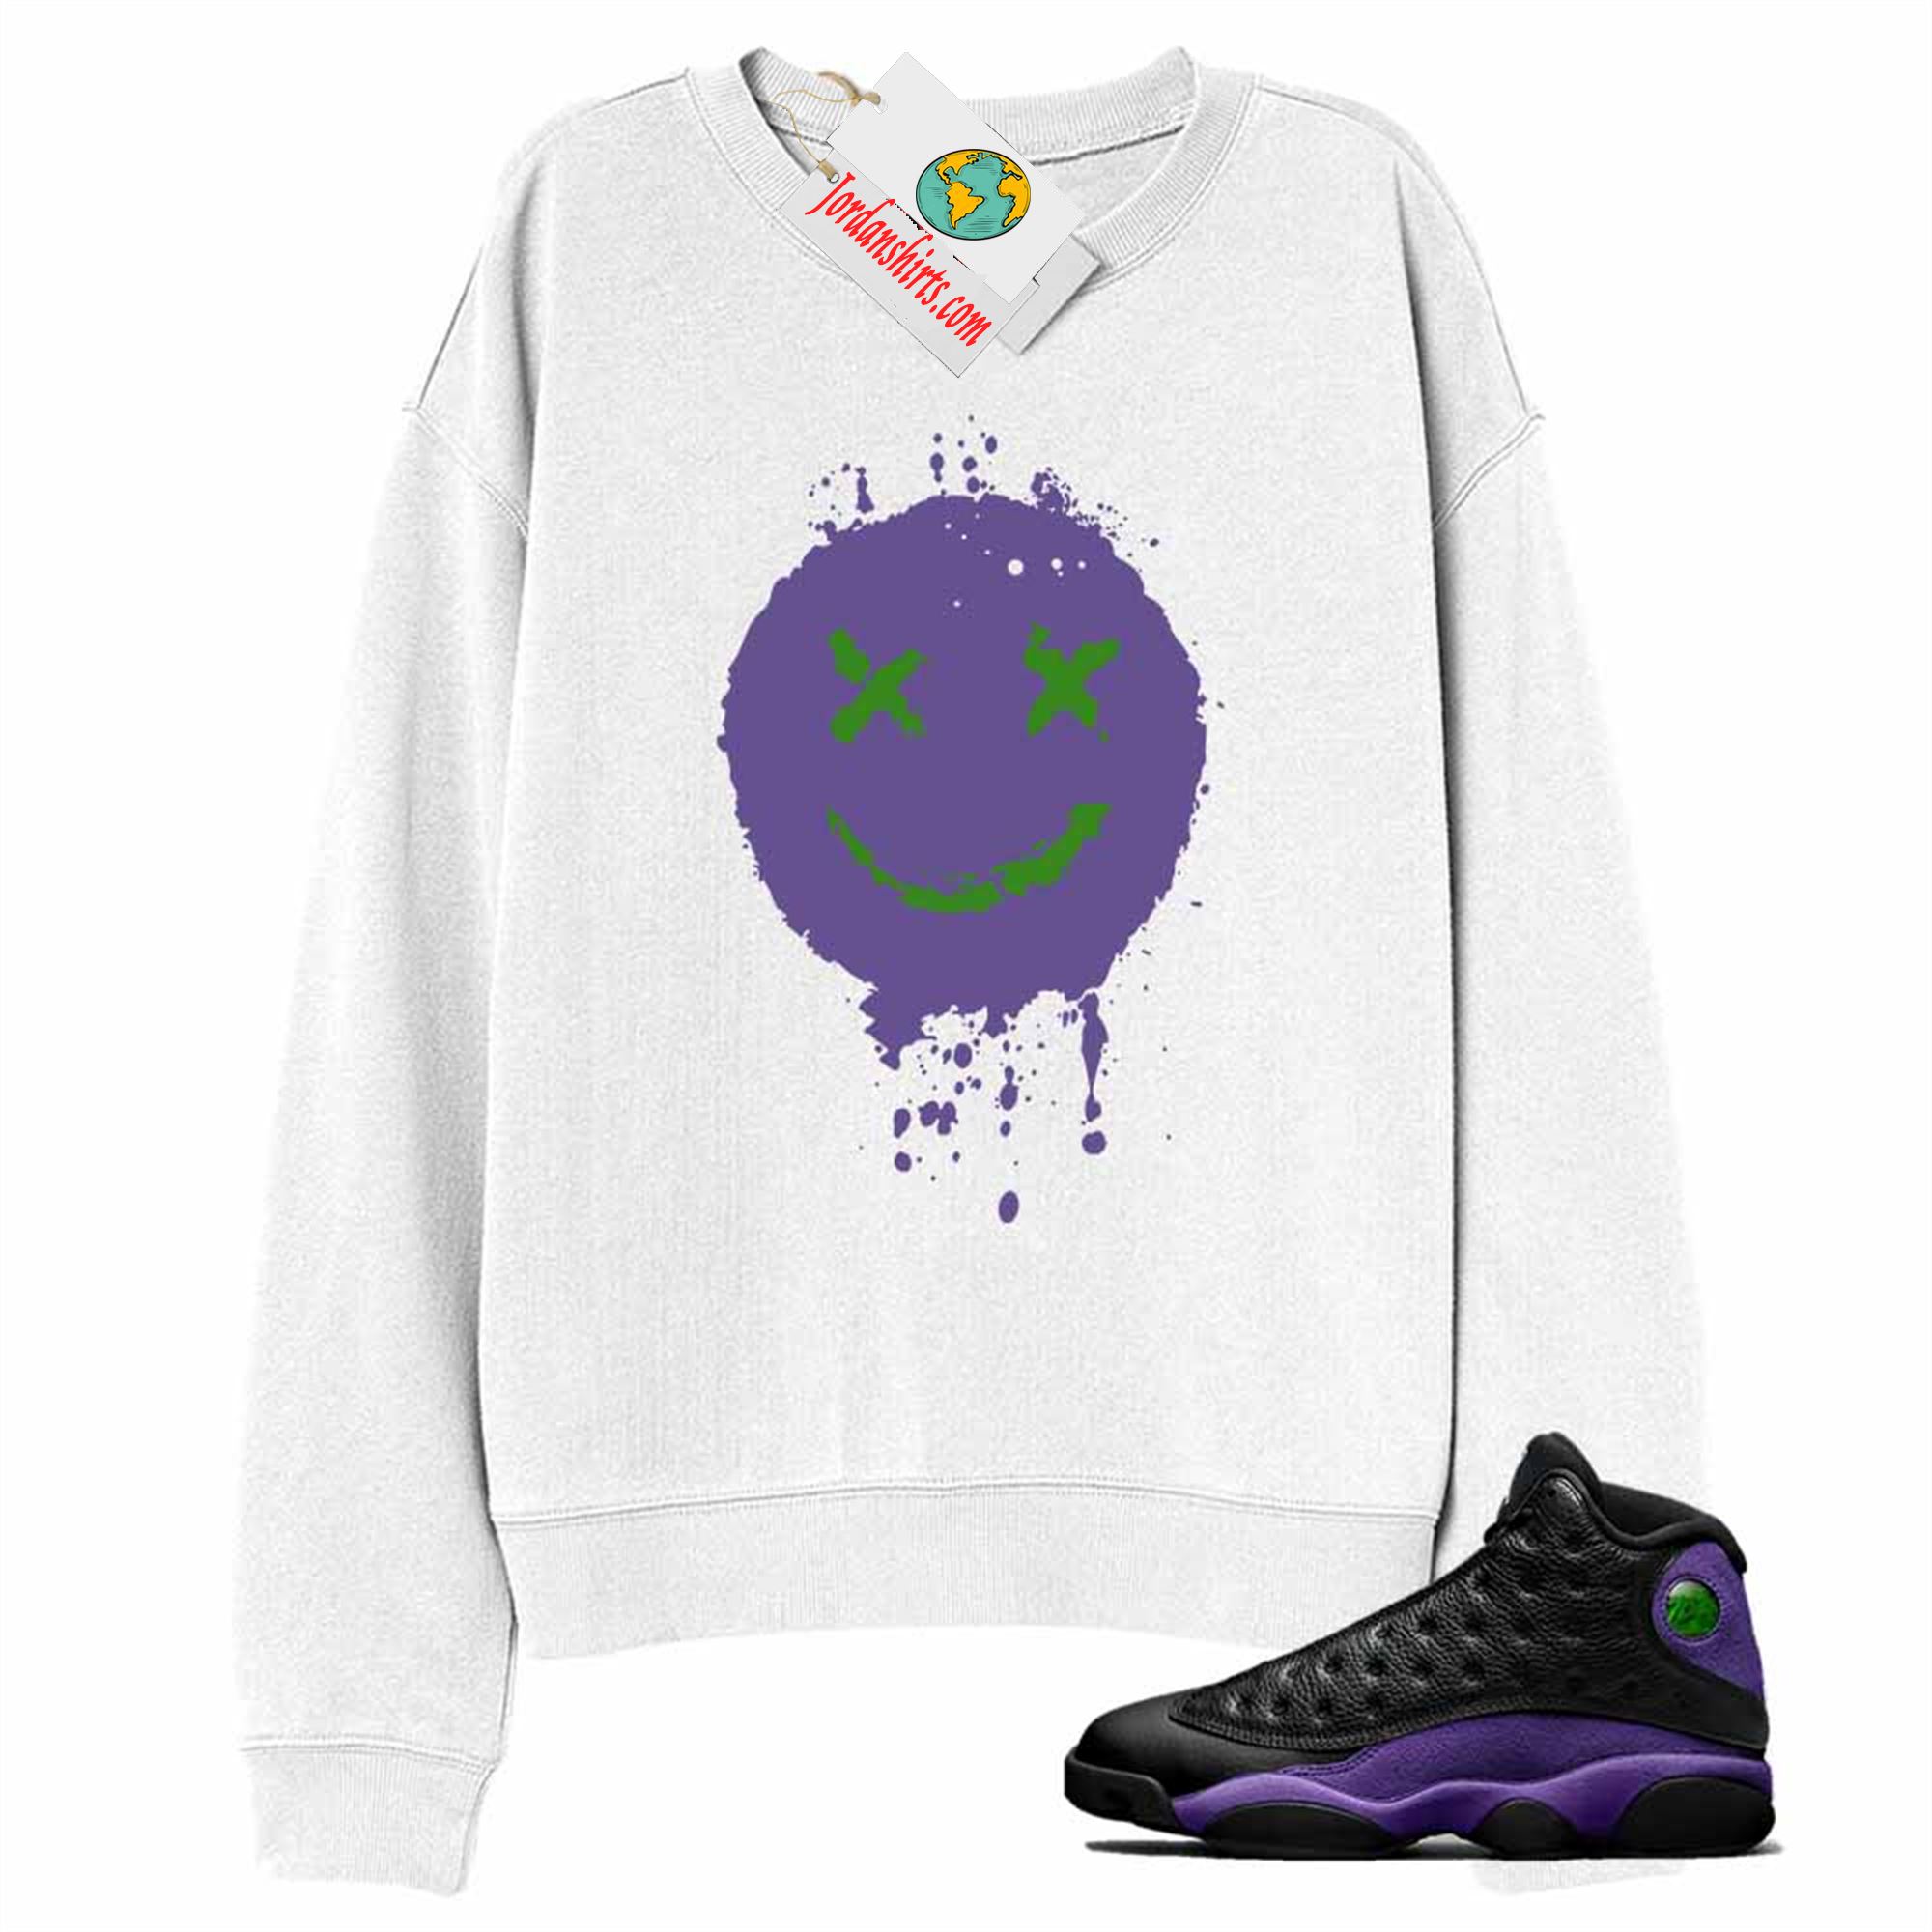 Jordan 13 Sweatshirt, Smile Happy Face White Sweatshirt Air Jordan 13 Court Purple 13s Size Up To 5xl